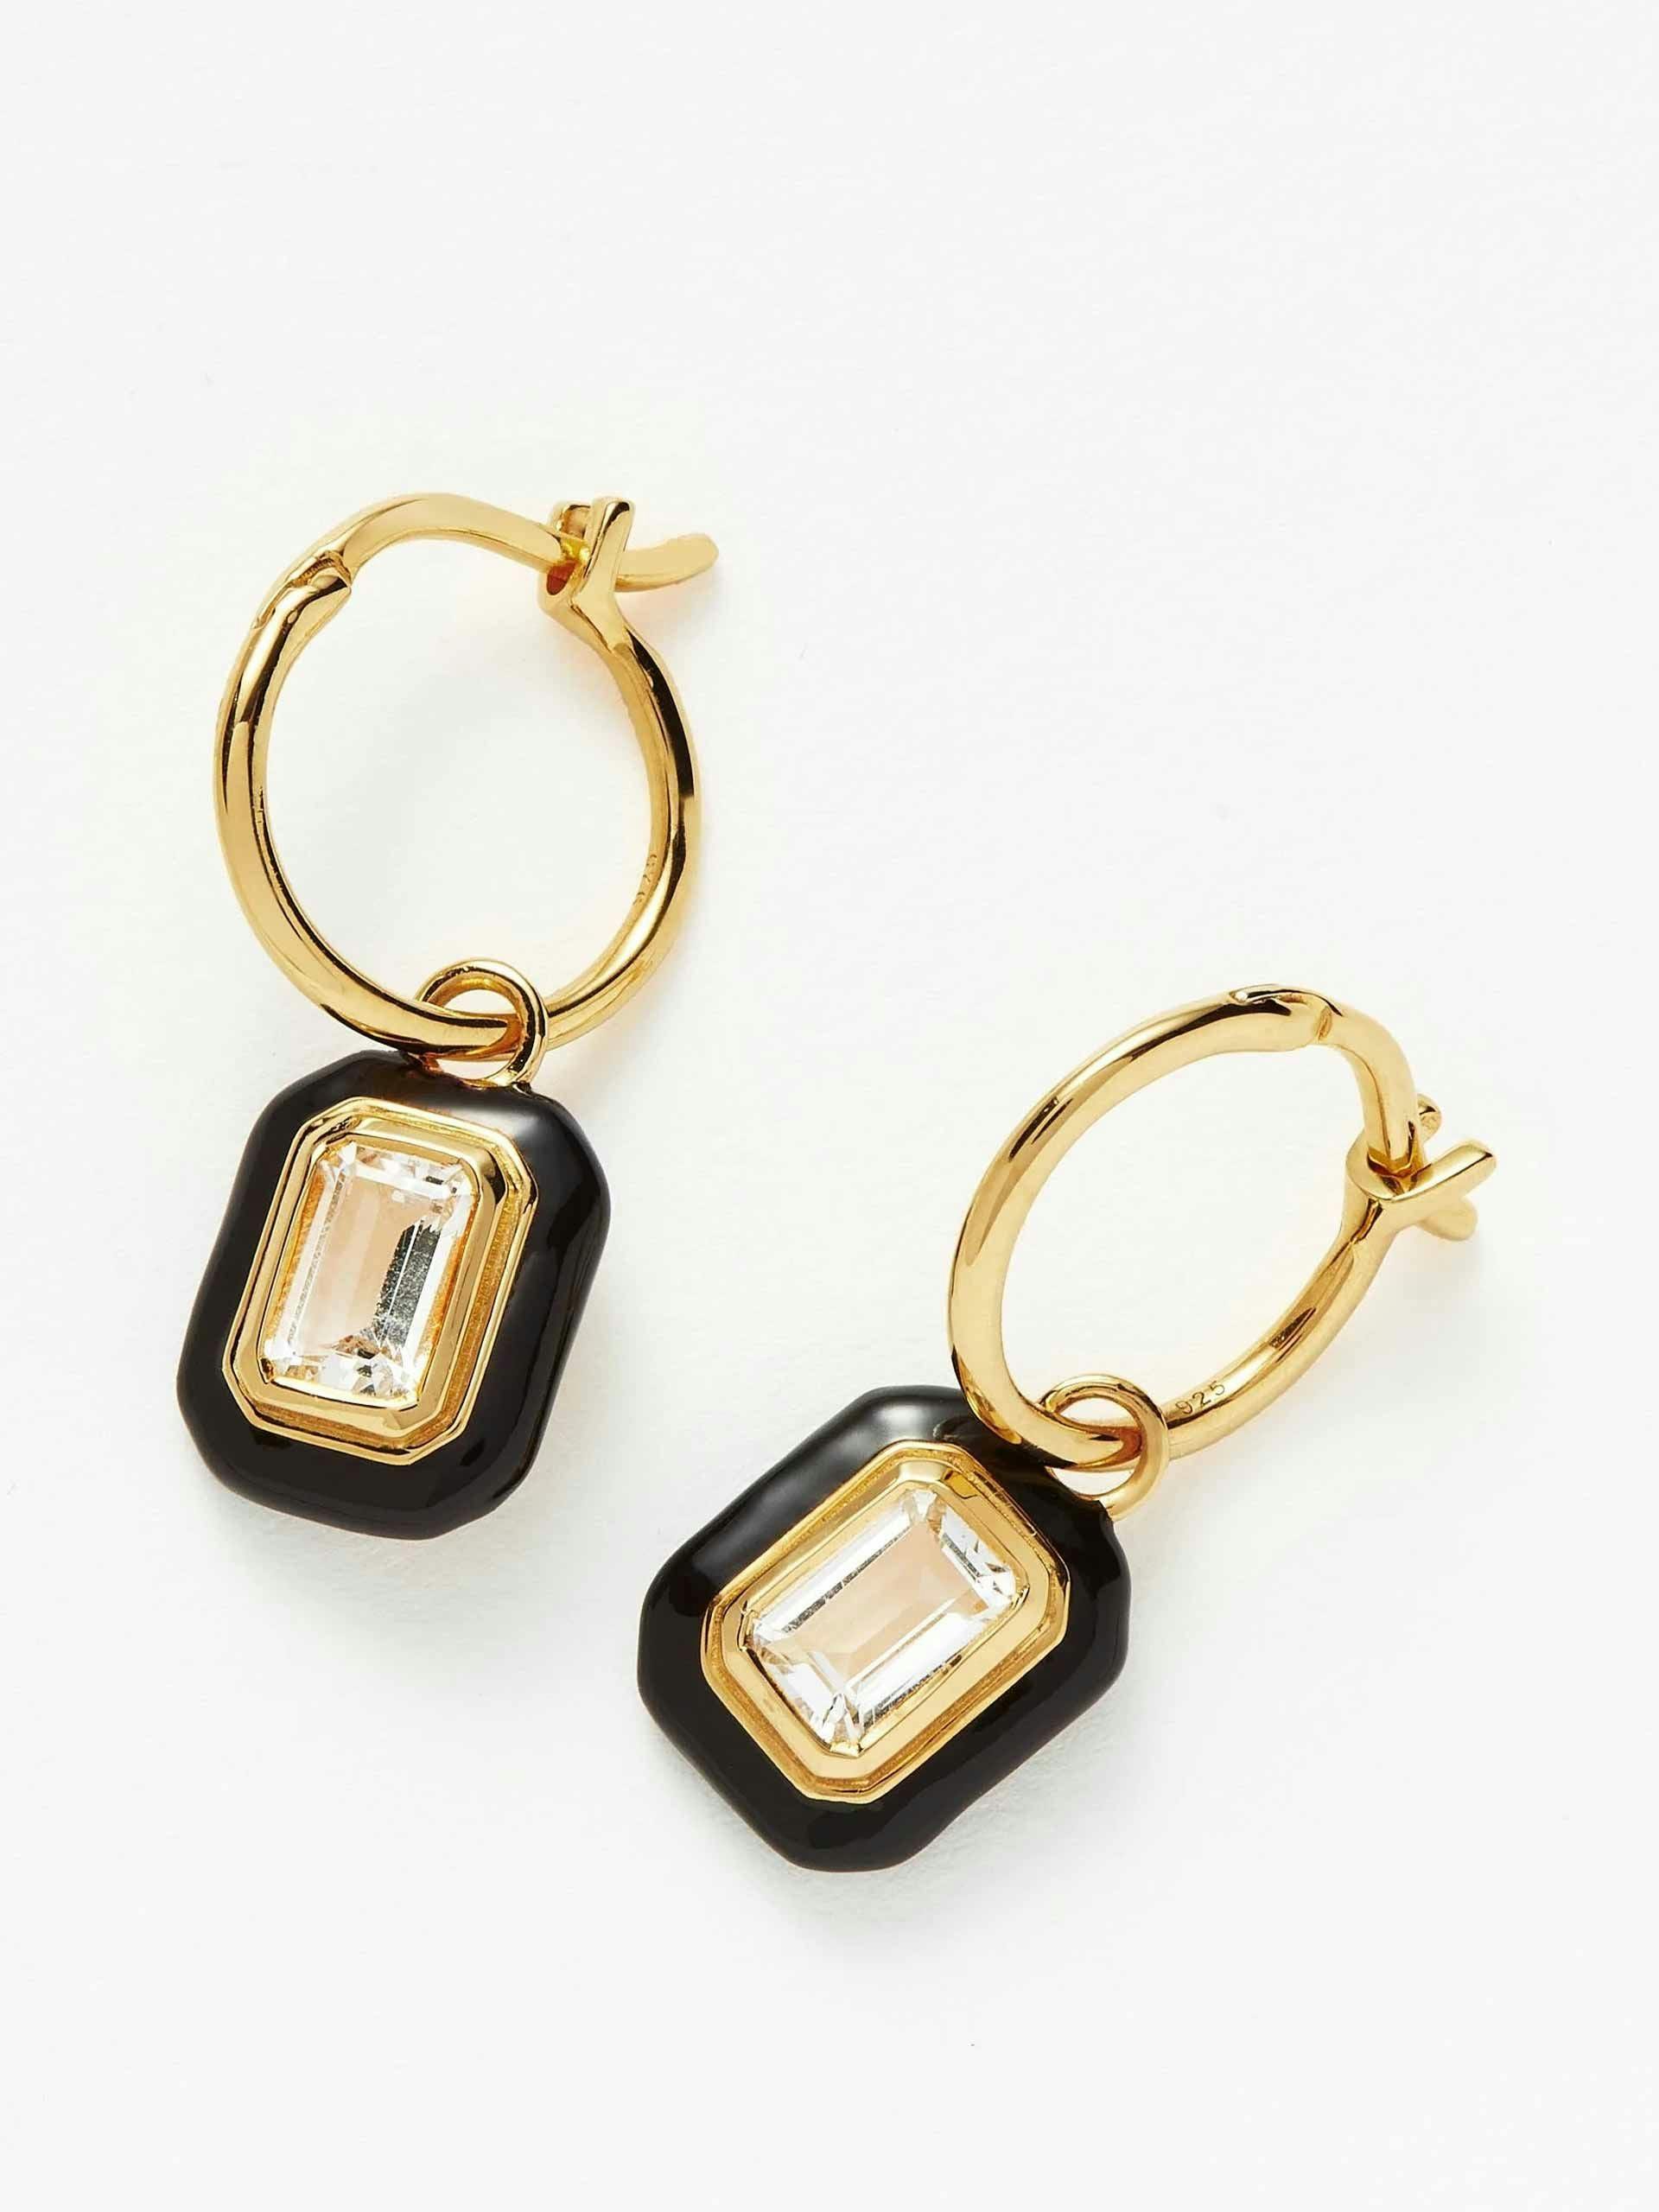 Enamel and stone charm mini hoop earrings